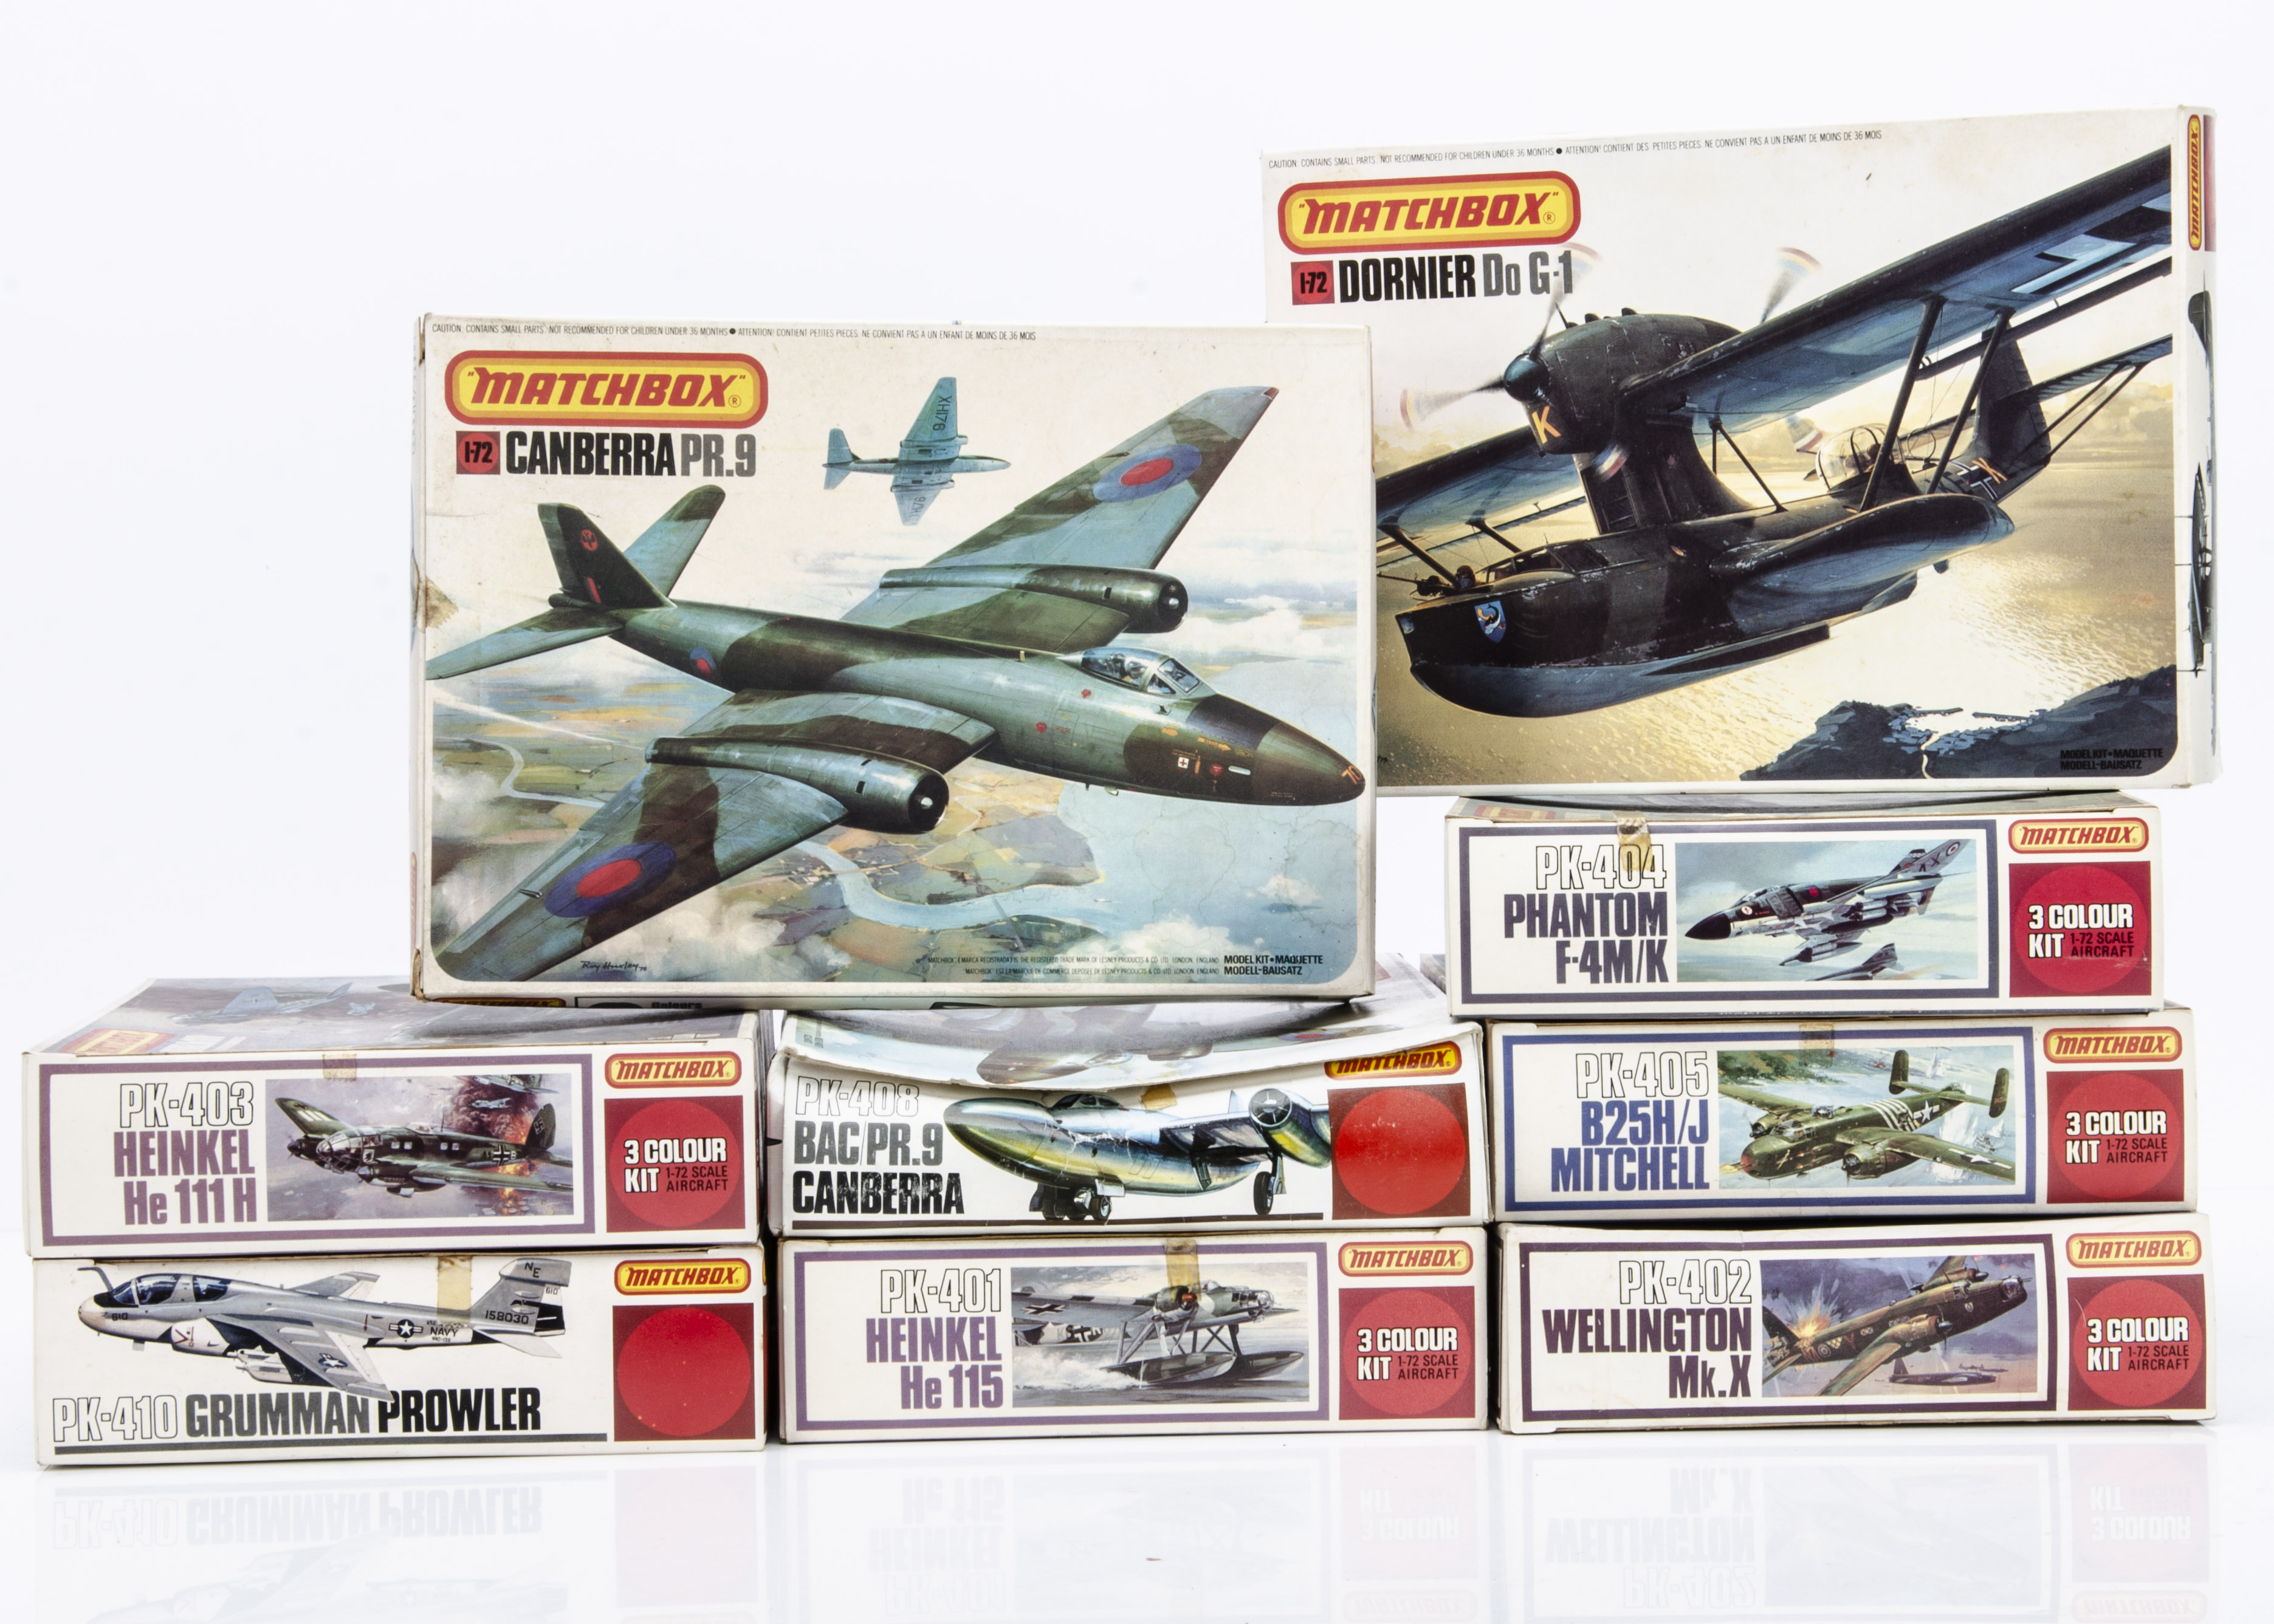 1970s-80s Matchbox 1:72 Aircraft Kits, PK-408 (2), PK-401, PK-402, PK-403, PK-404, PK-405, PK409,